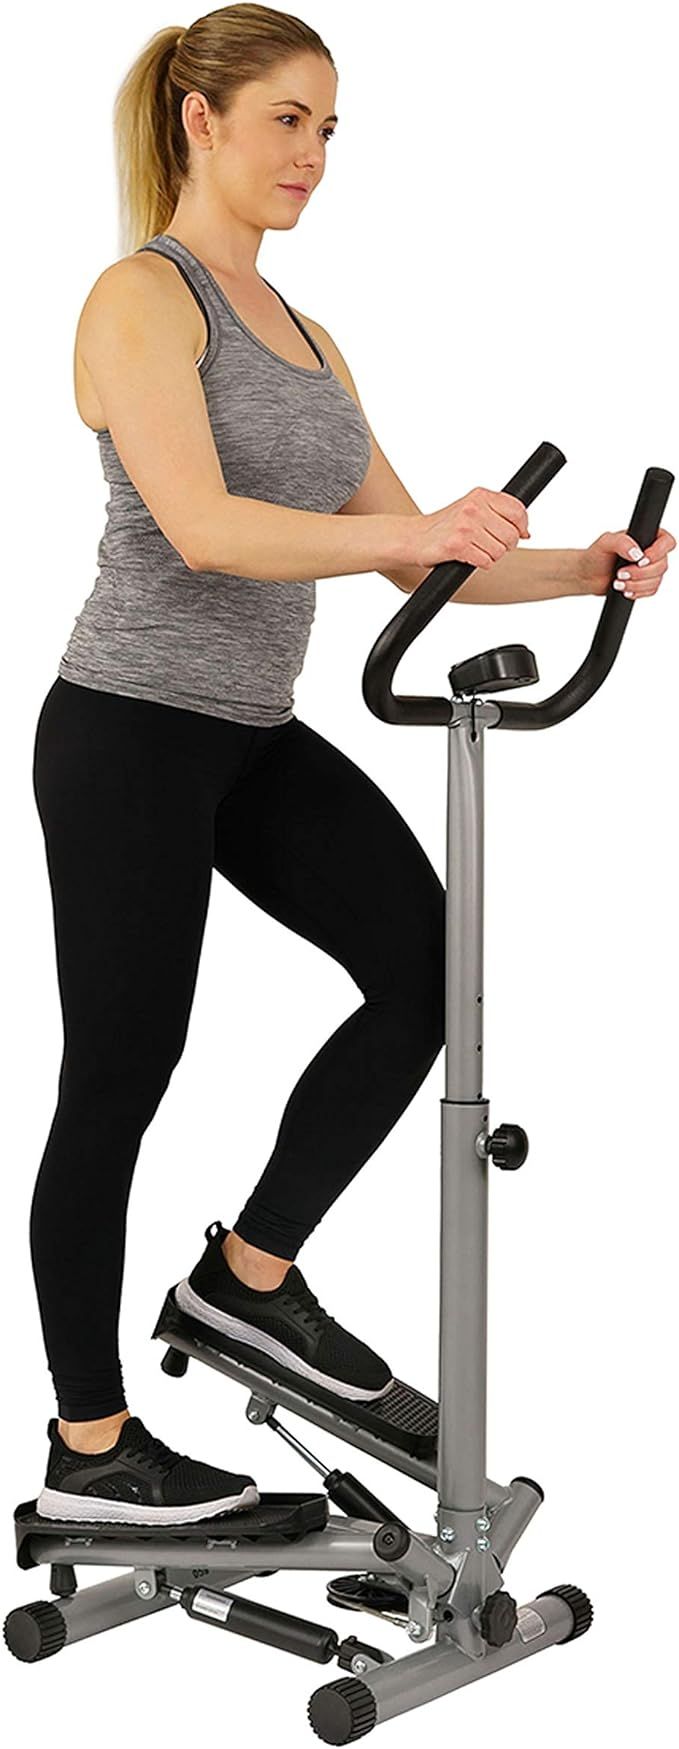 Sunny Health & Fitness Twist Stepper Step Machine w/Handle Bar and LCD Monitor - NO. 059 | Amazon (US)